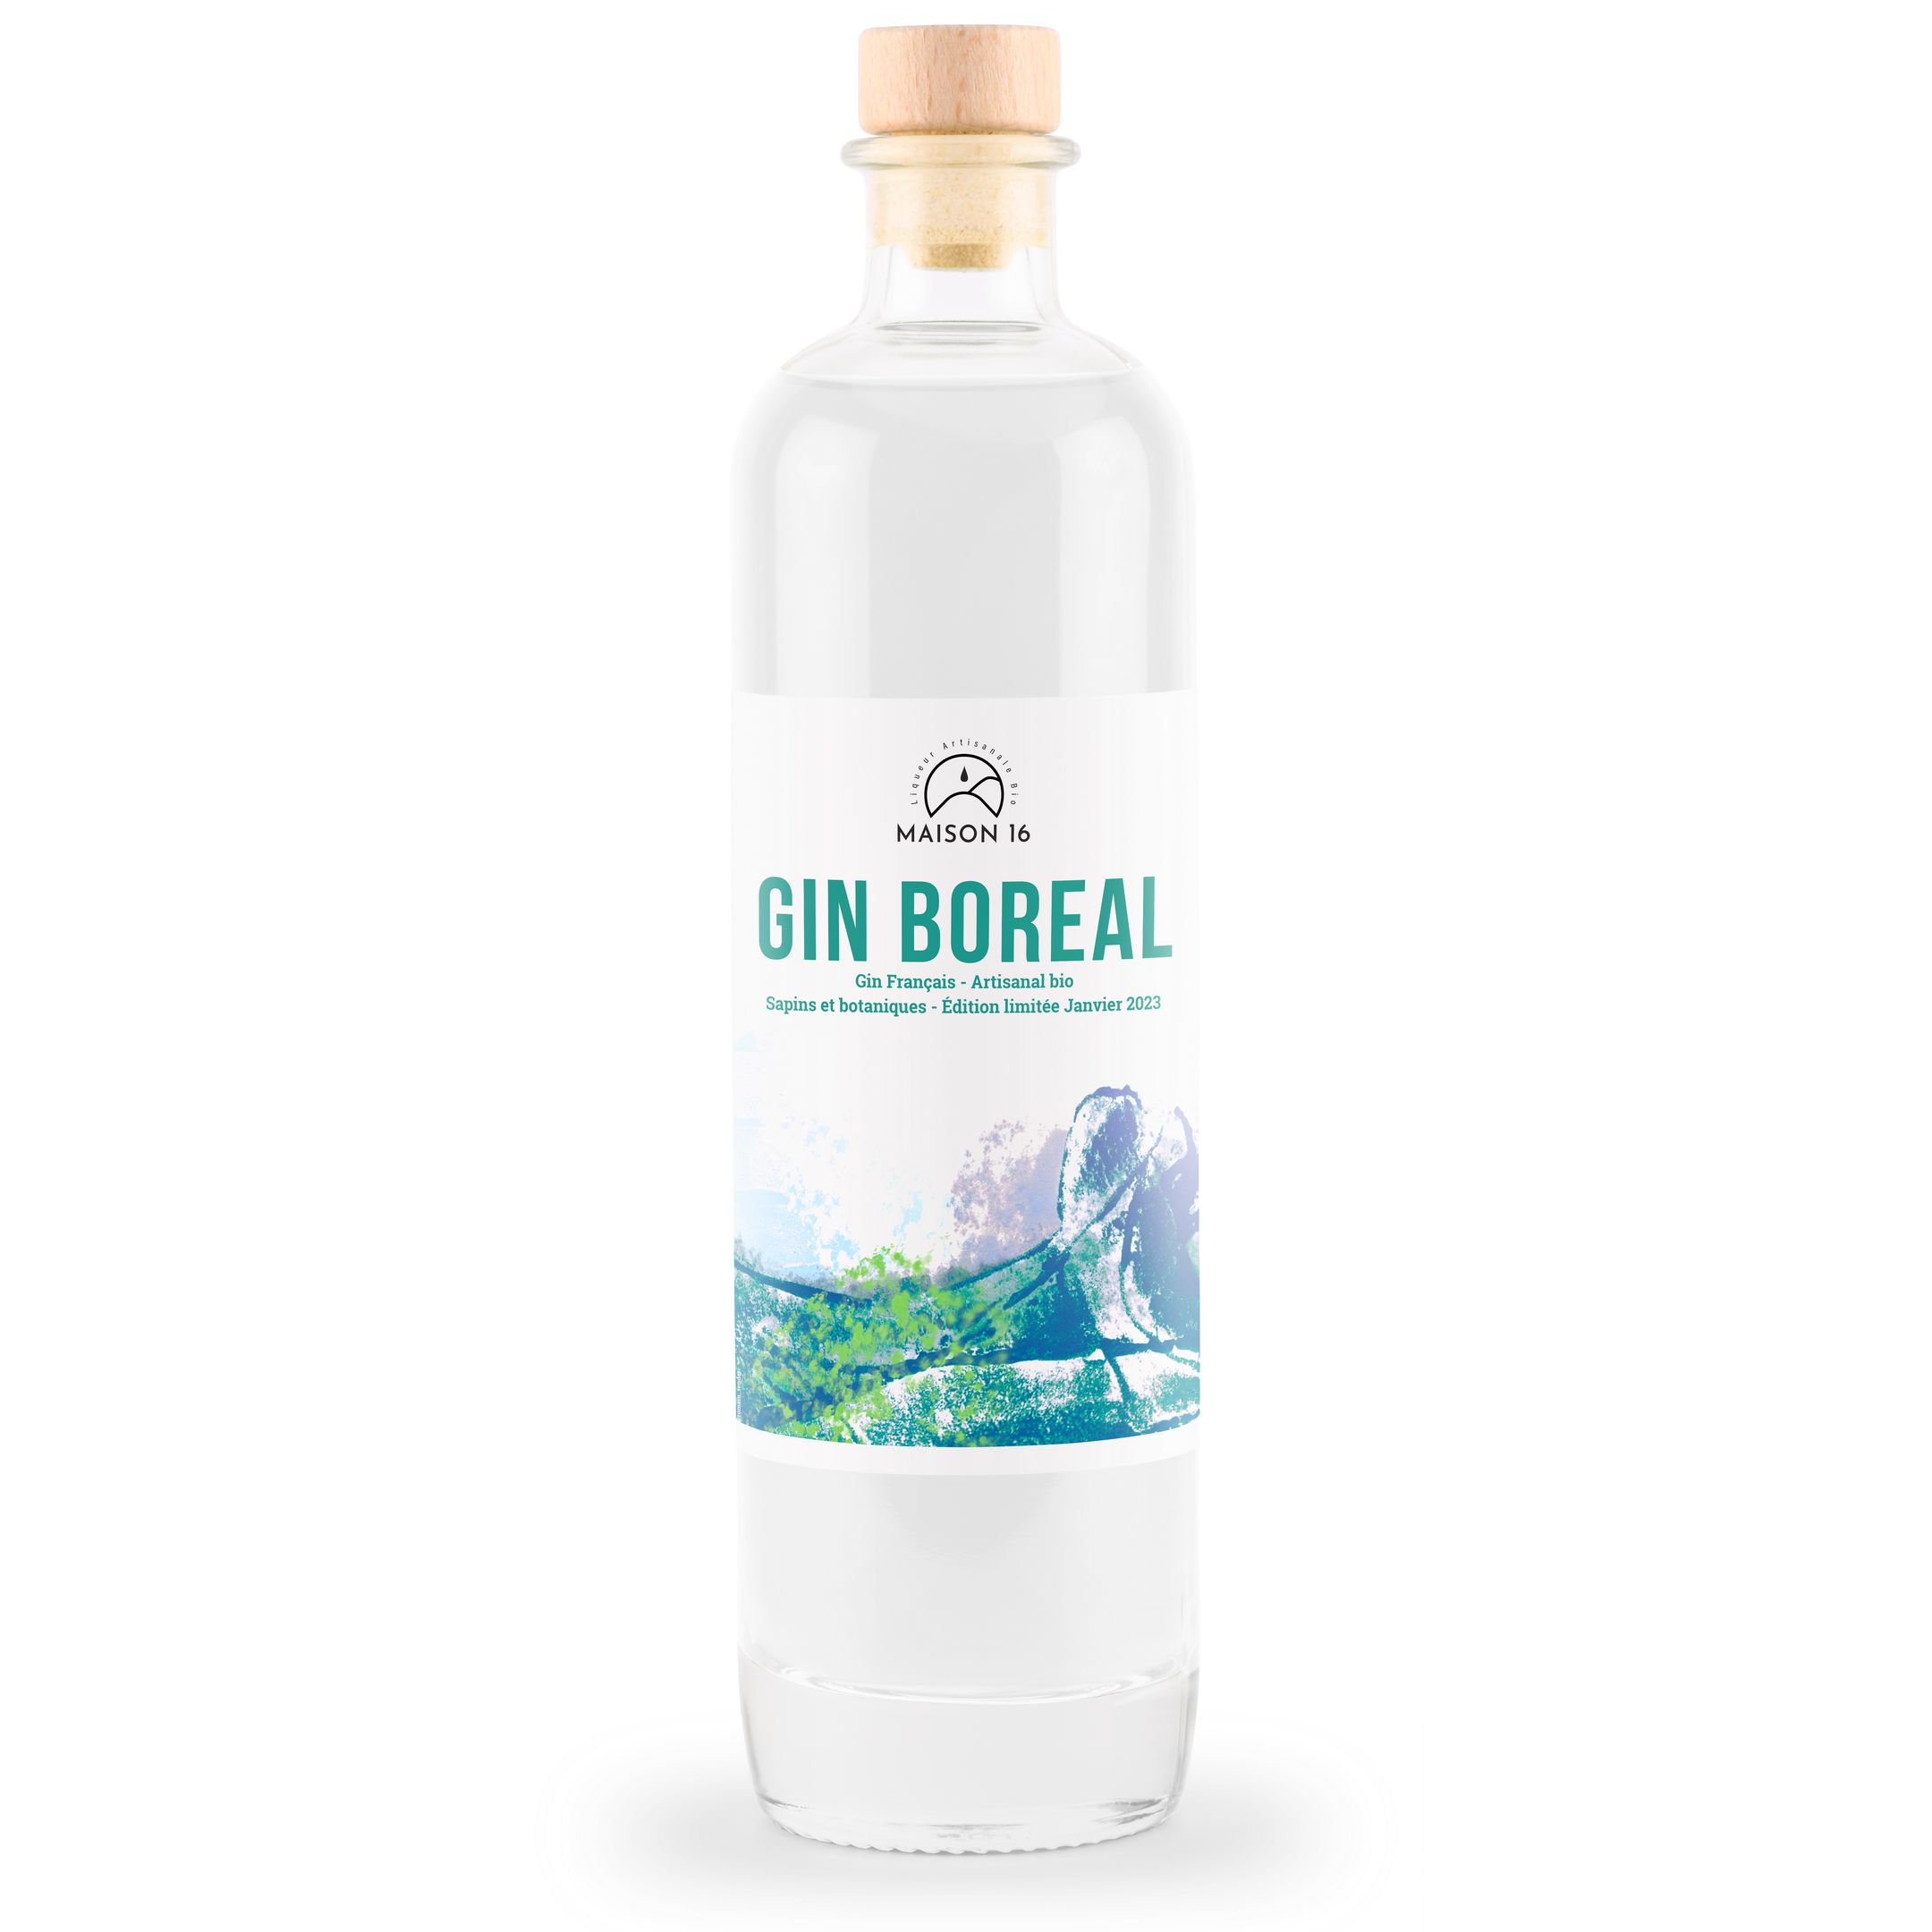 Gin Boréal - Maison 16